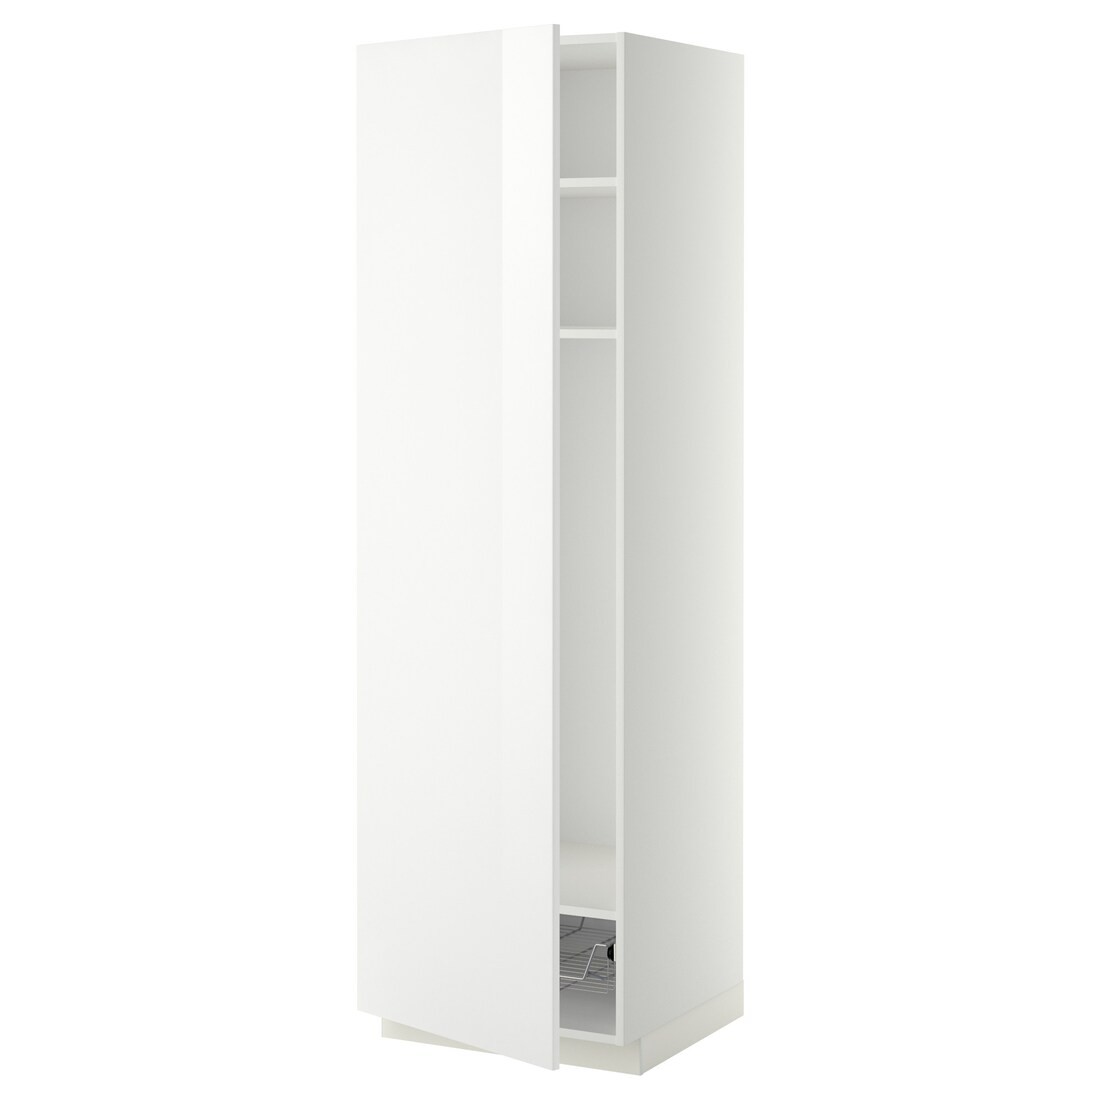 IKEA METOD МЕТОД Шкаф высокий, полки / проволочная корзина, белый / Ringhult белый, 60x60x200 см 29452968 | 294.529.68